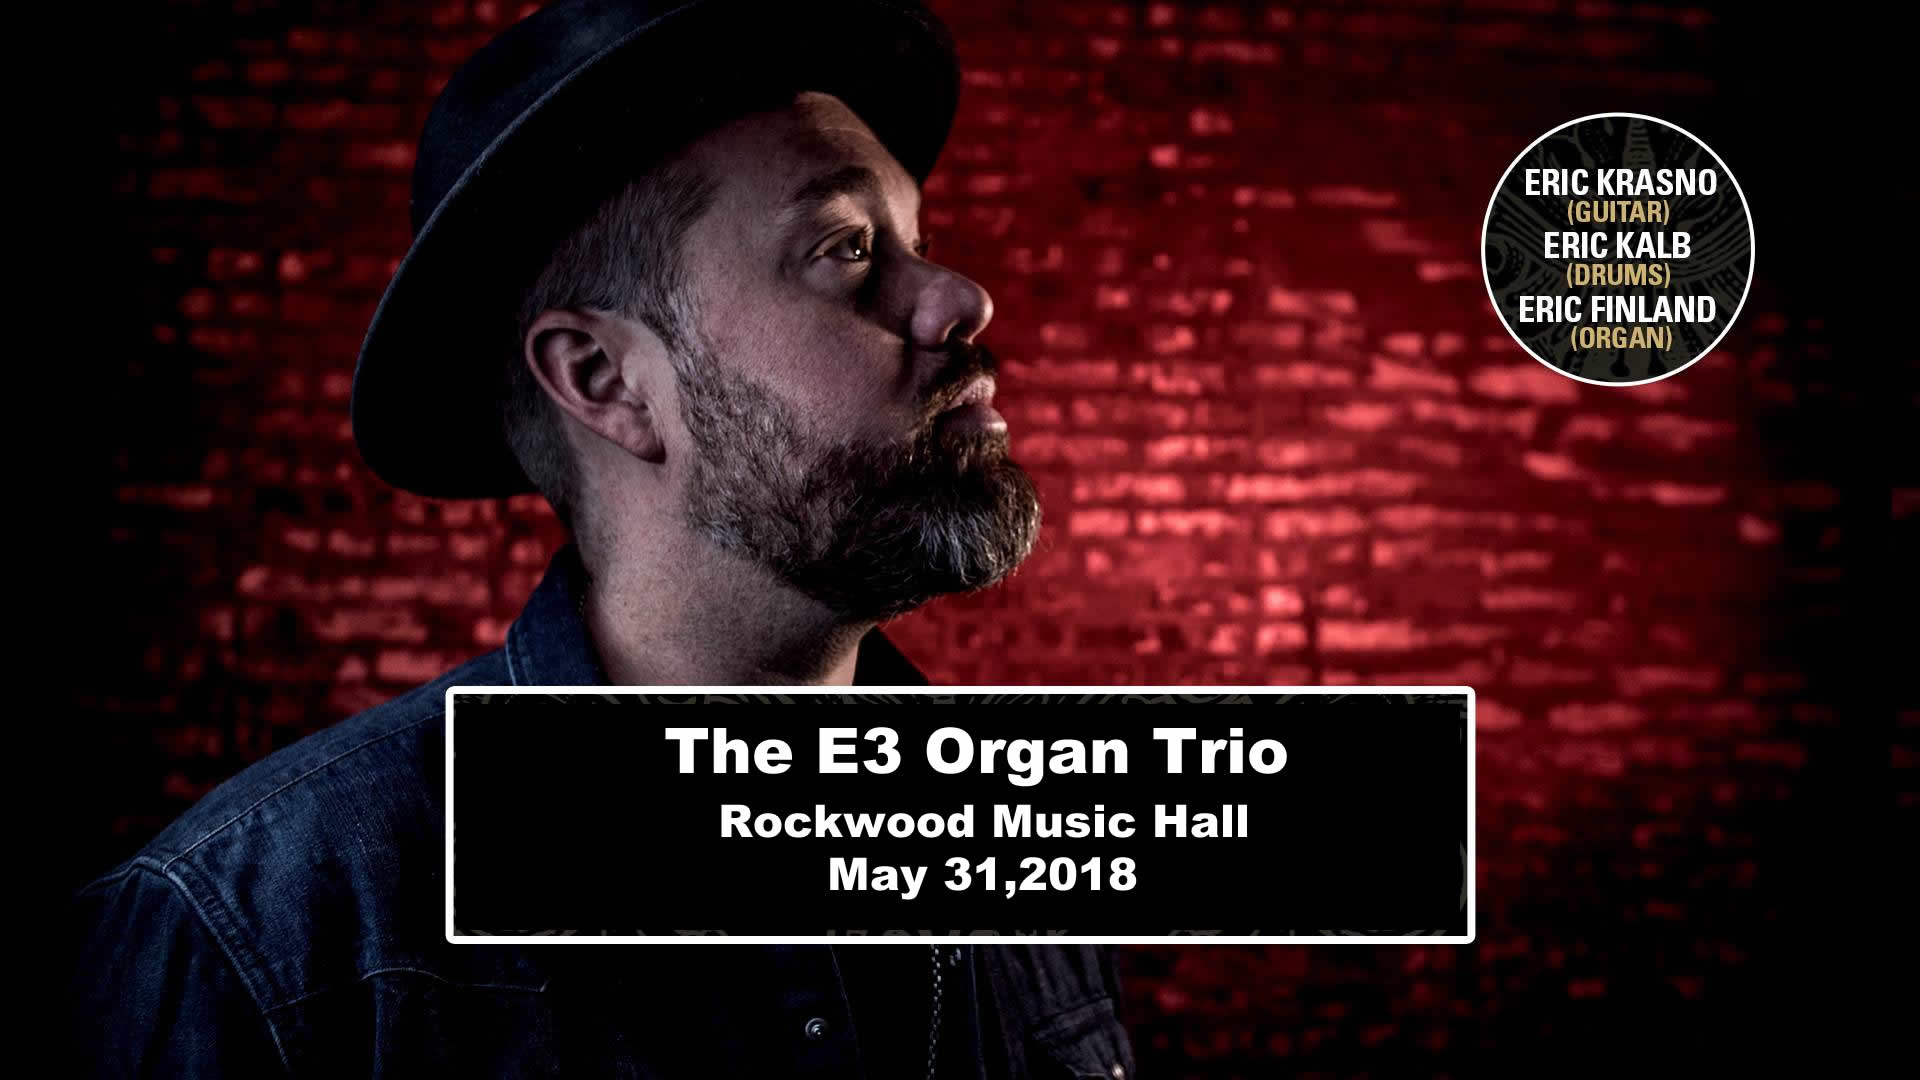 The E3 Organ Trio